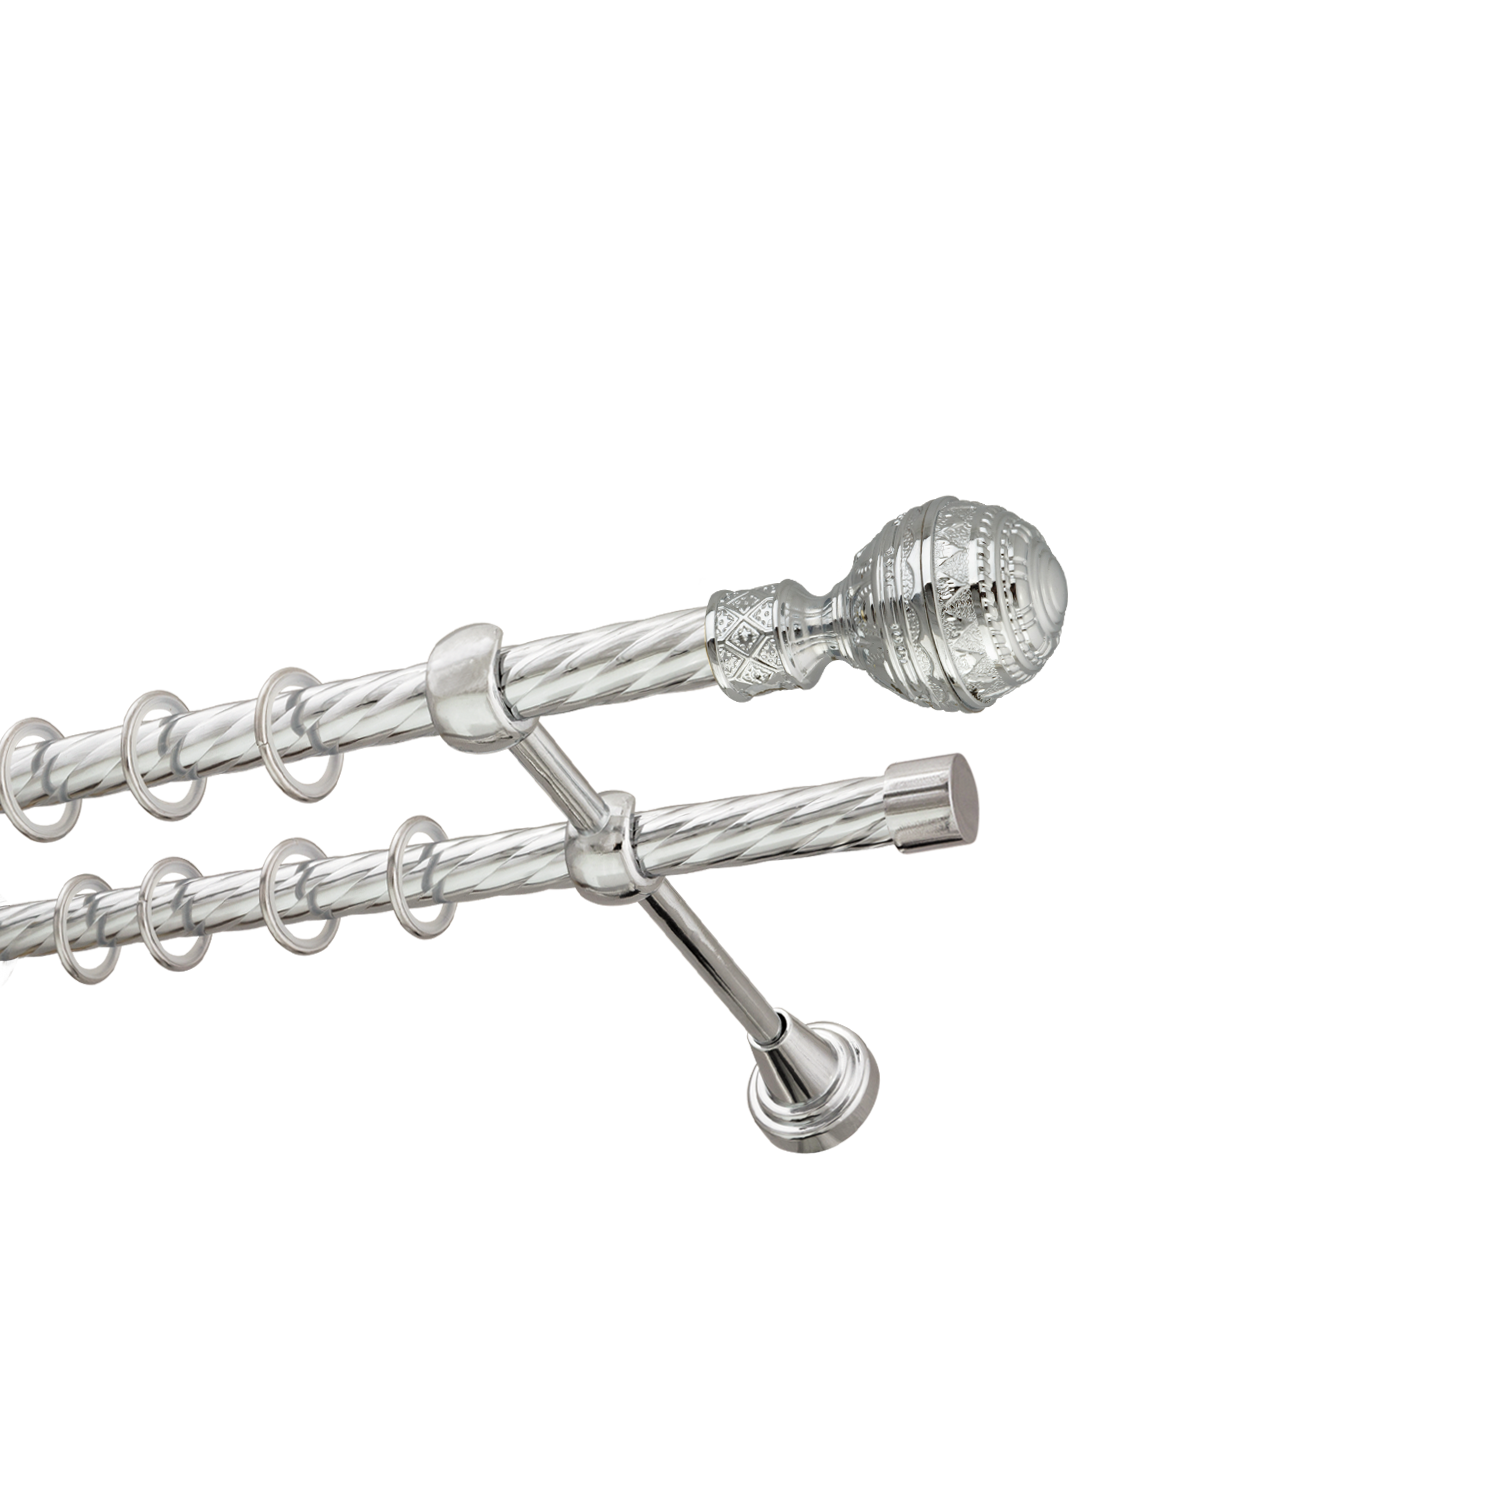 Металлический карниз для штор Роял, двухрядный 16/16 мм, серебро, витая штанга, длина 140 см - фото Wikidecor.ru